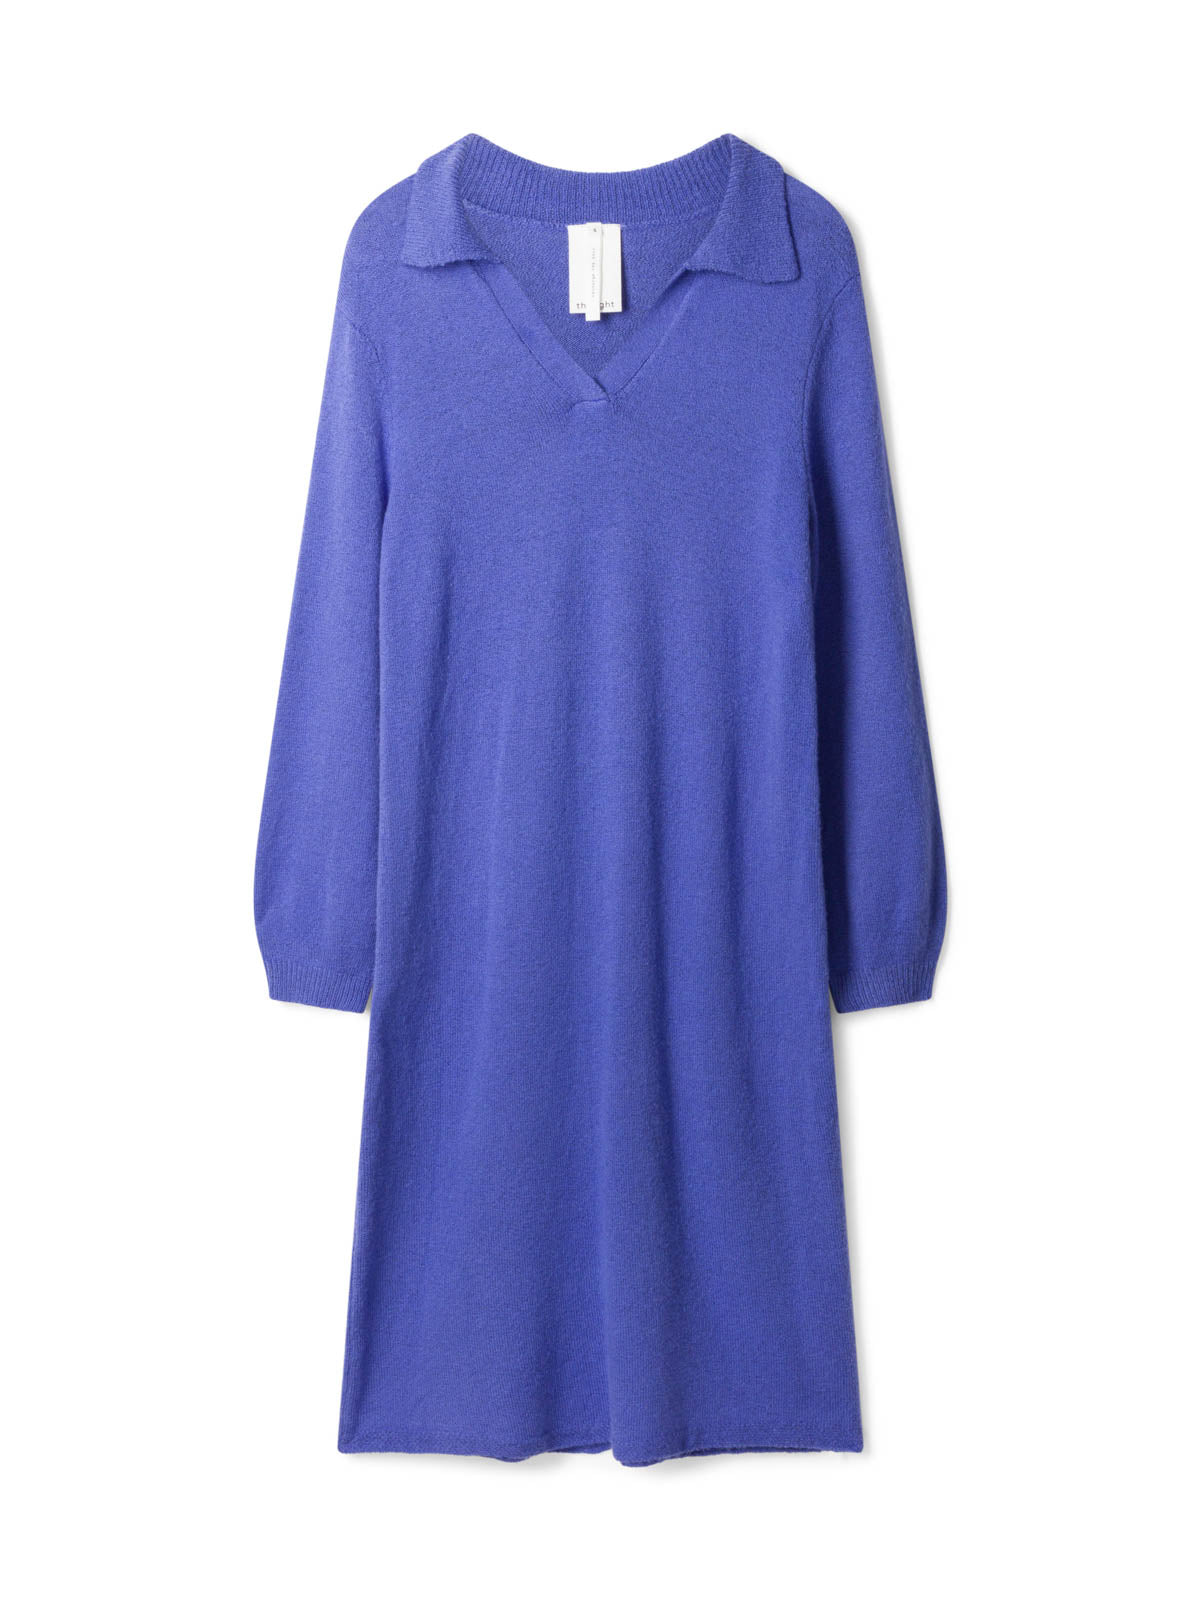 Corinia Organic Cotton Knitted Shift Dress - Periwinkle Blue